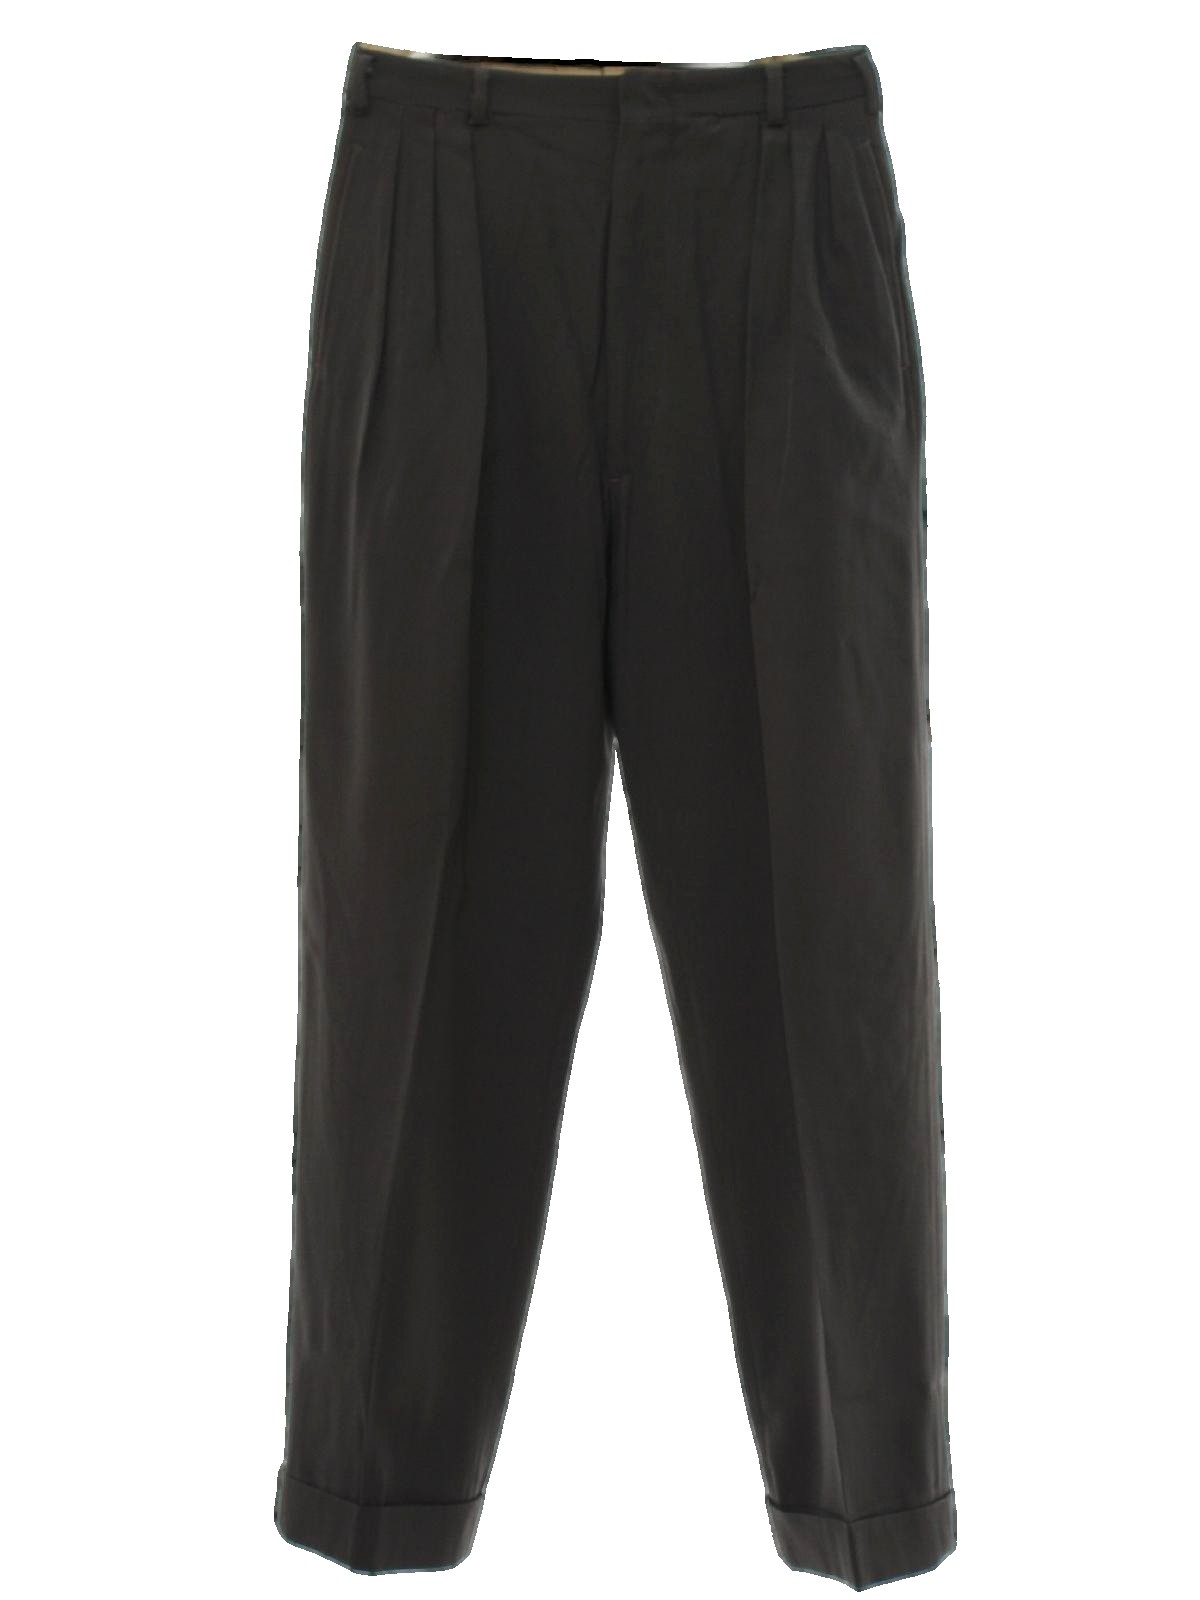 Retro 1940s Pants: Late 40s -No Label- Mens dark gray drapey wool ...